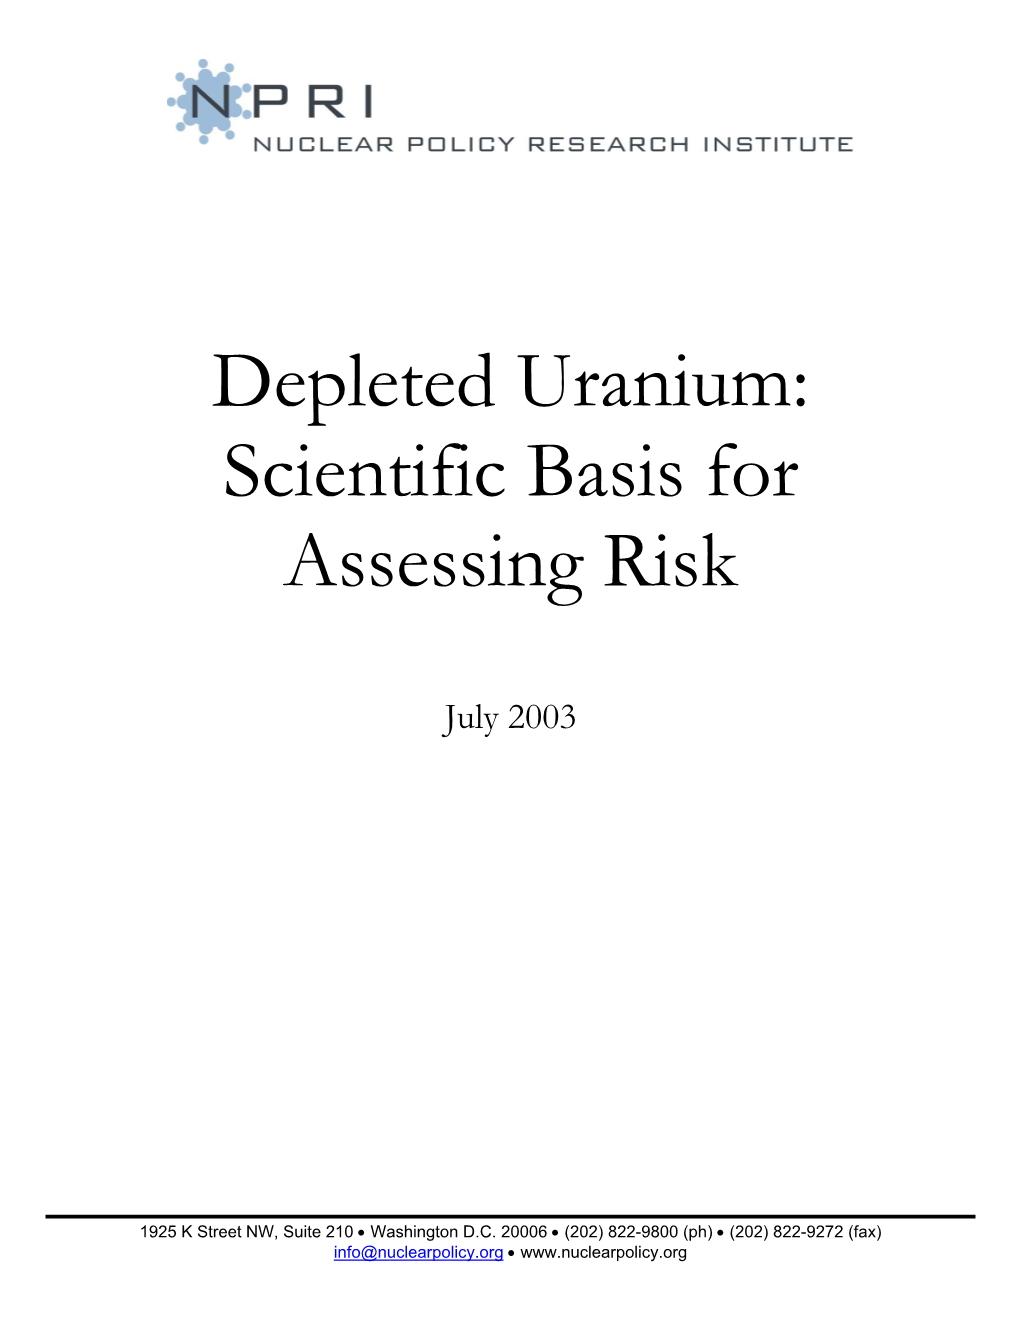 Depleted Uranium: Scientific Basis for Assessing Risk